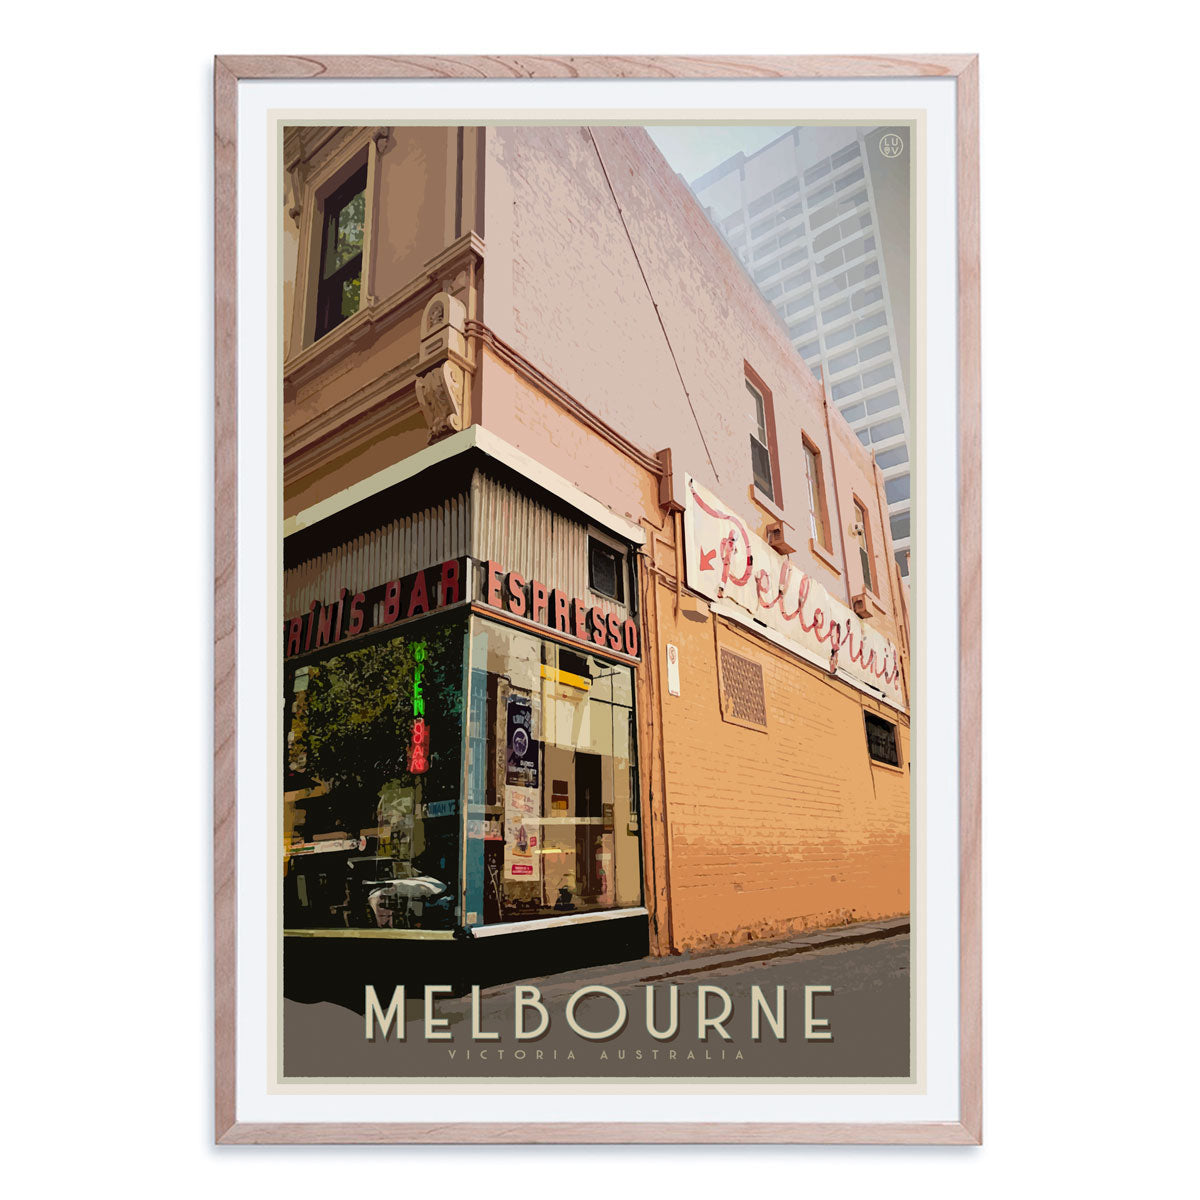 Melbourne Espresso Bar retro vintage poster in oak frame by Places We Luv